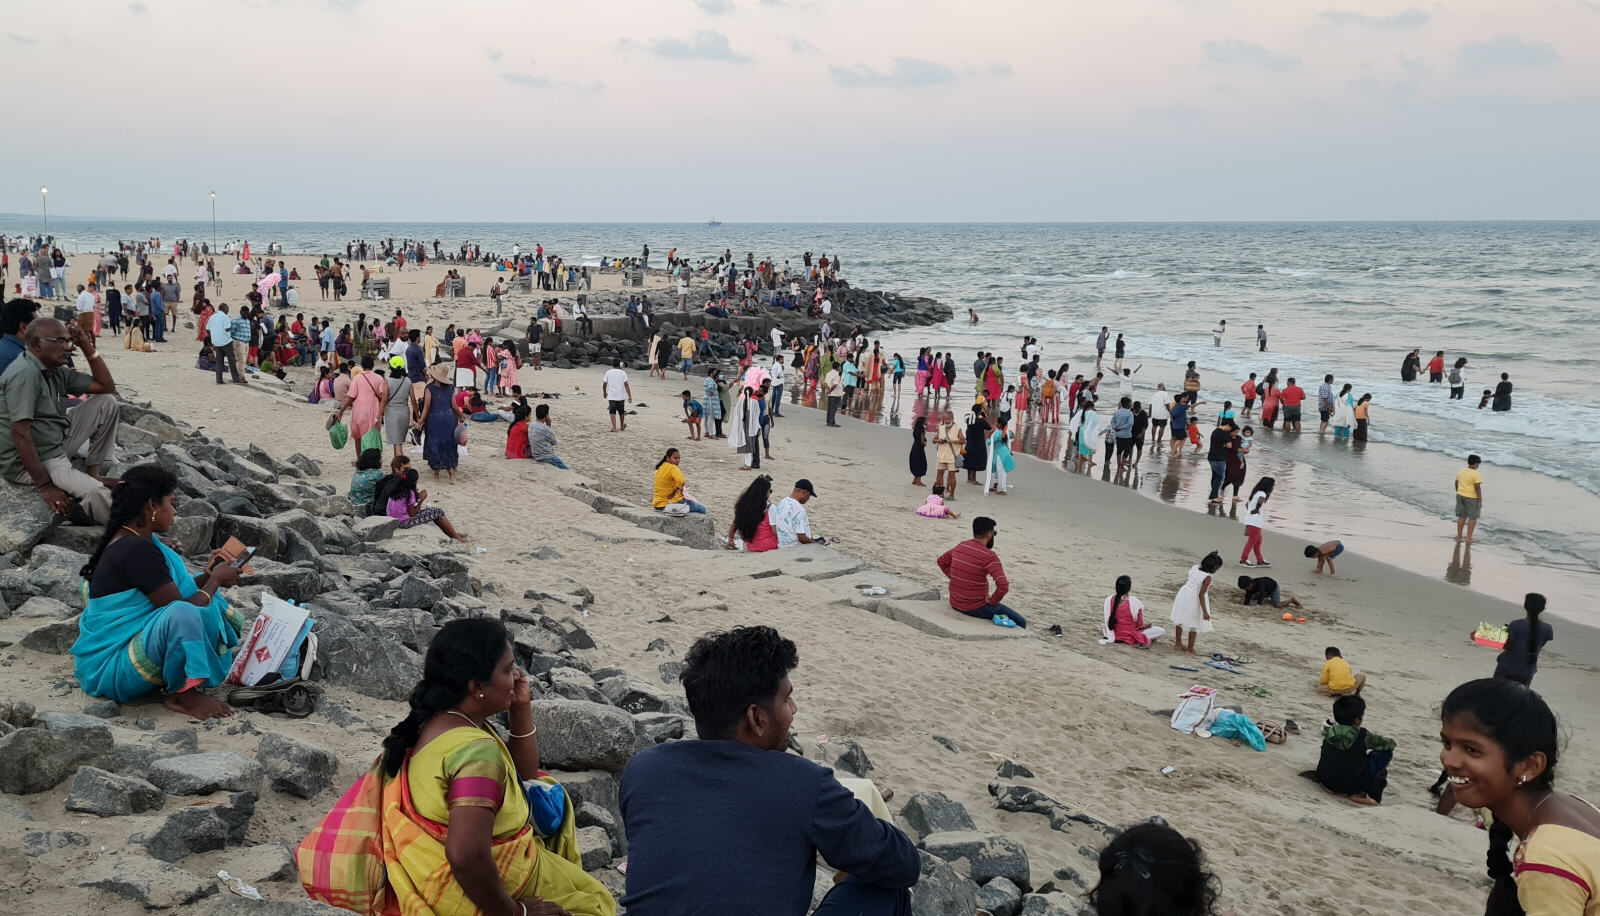 The beach at Pondicherry, India